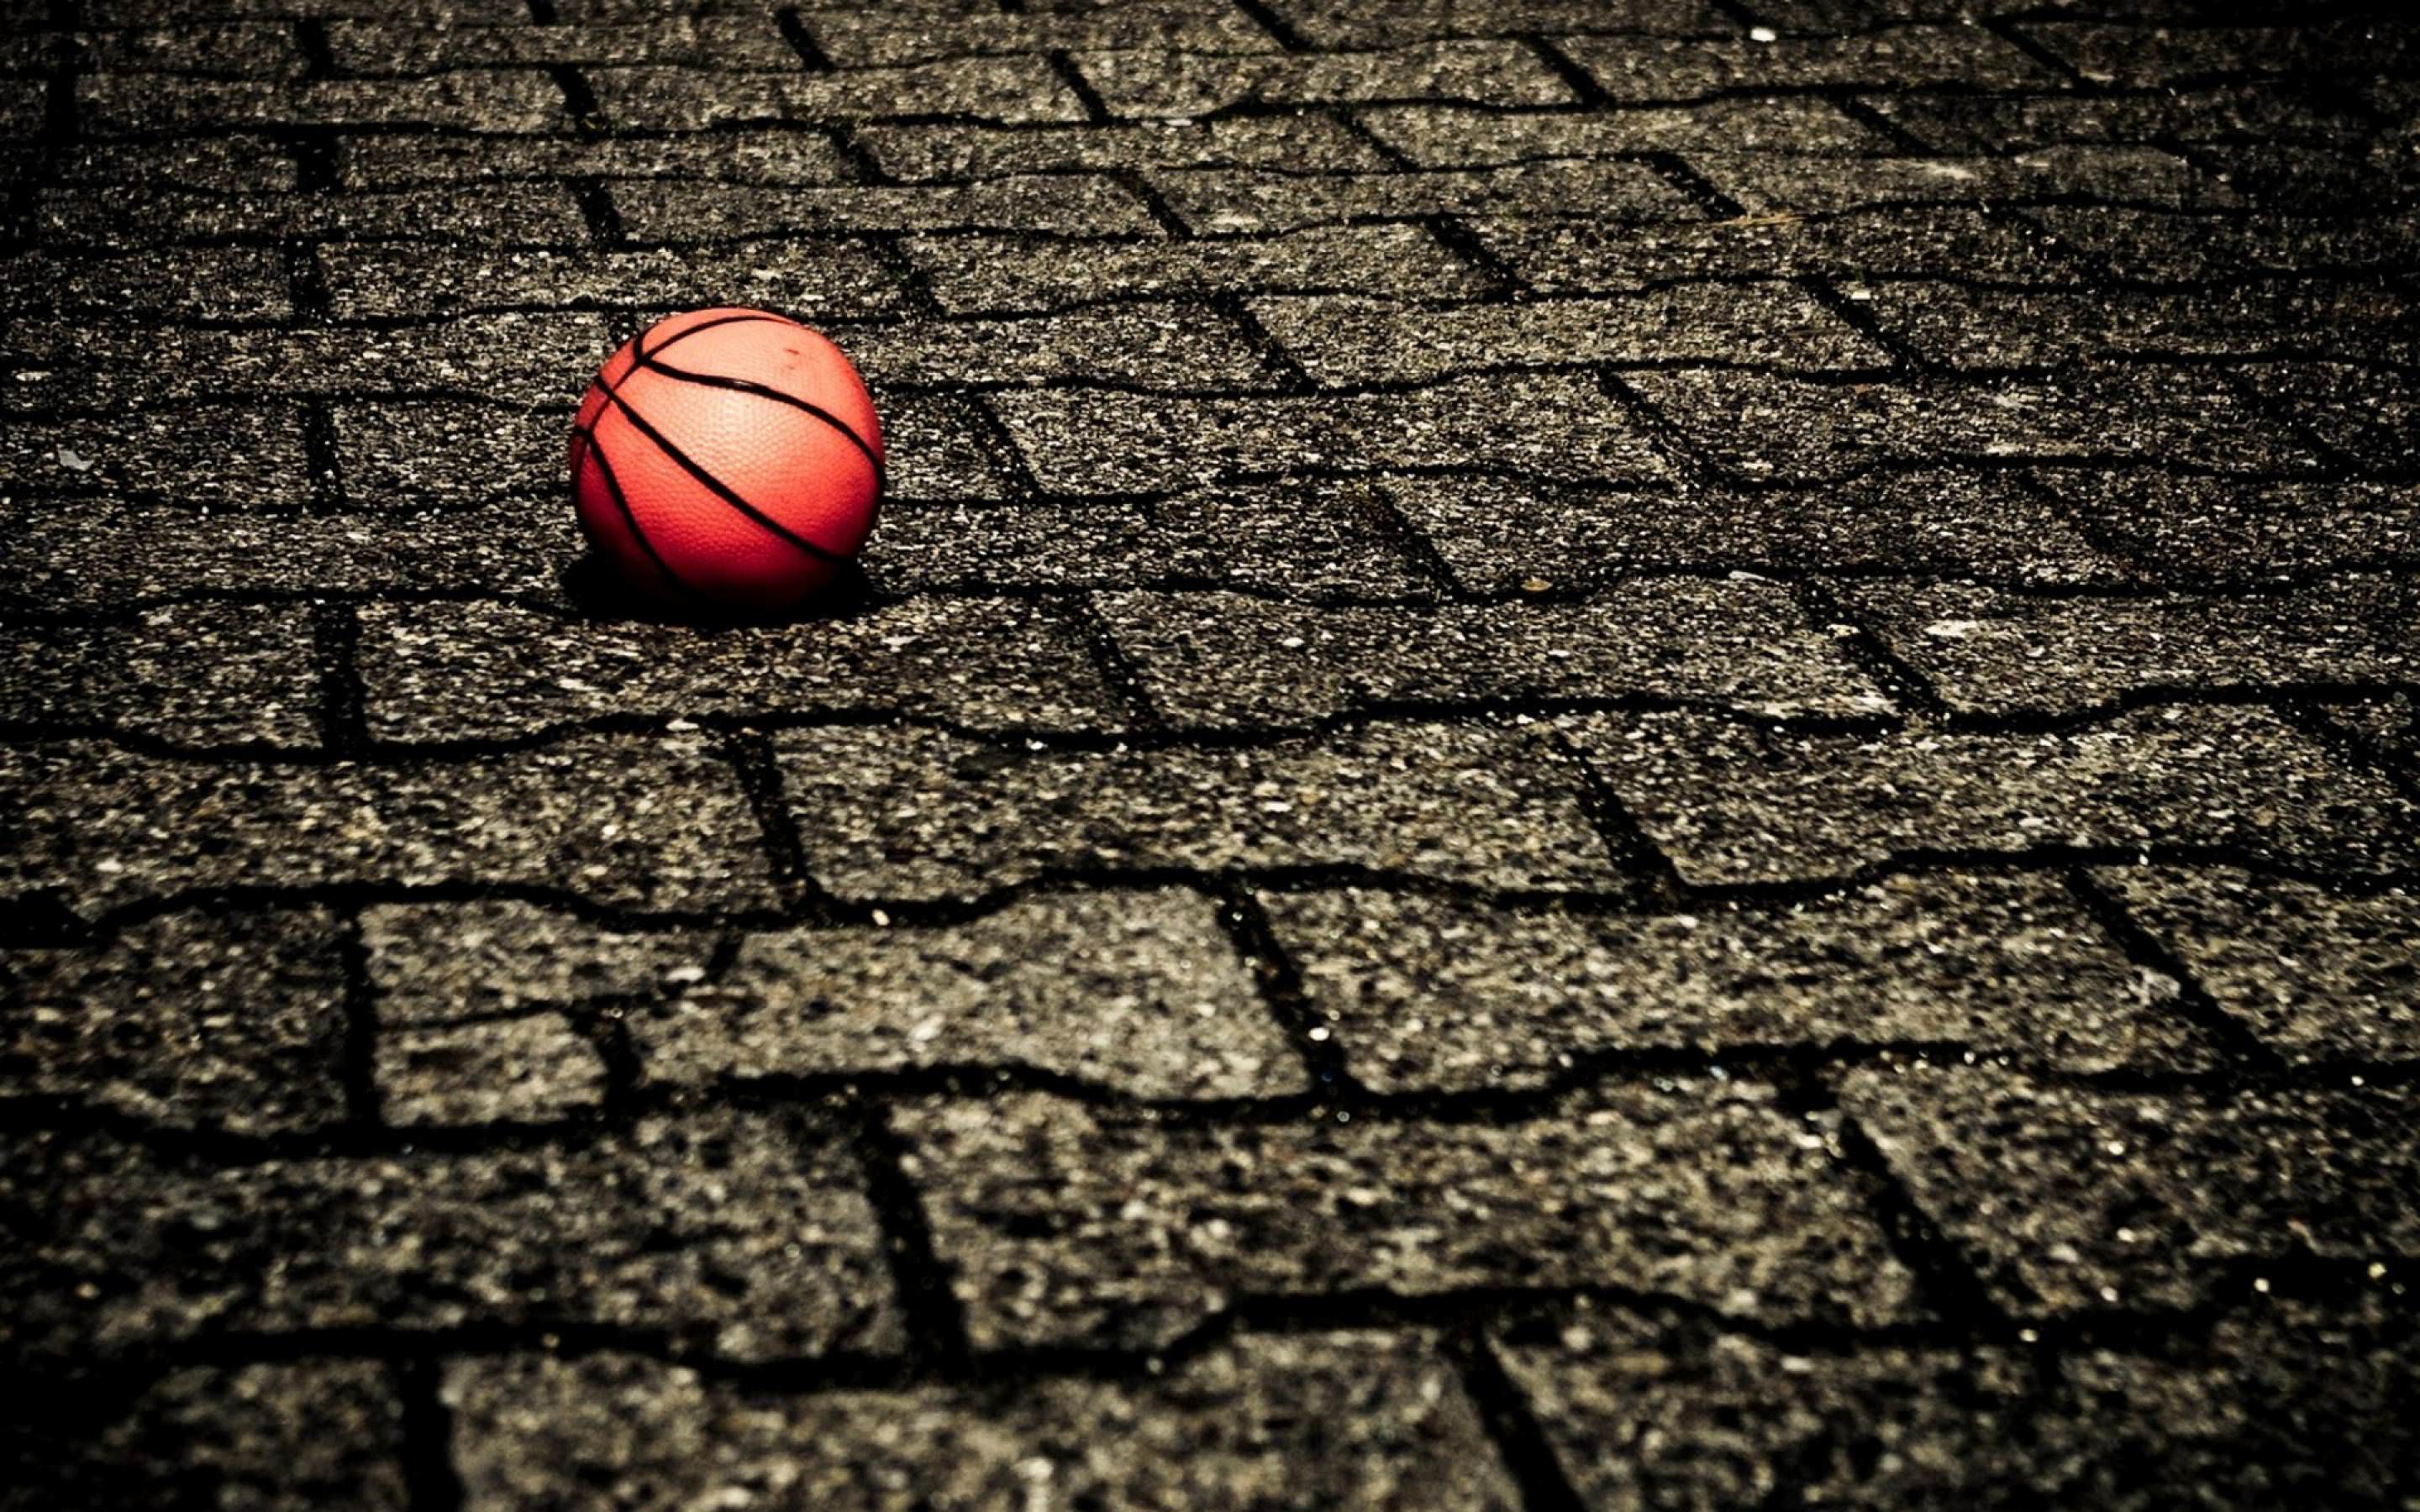 wallpapers de basketball,red,ball,cobblestone,flooring,soccer ball